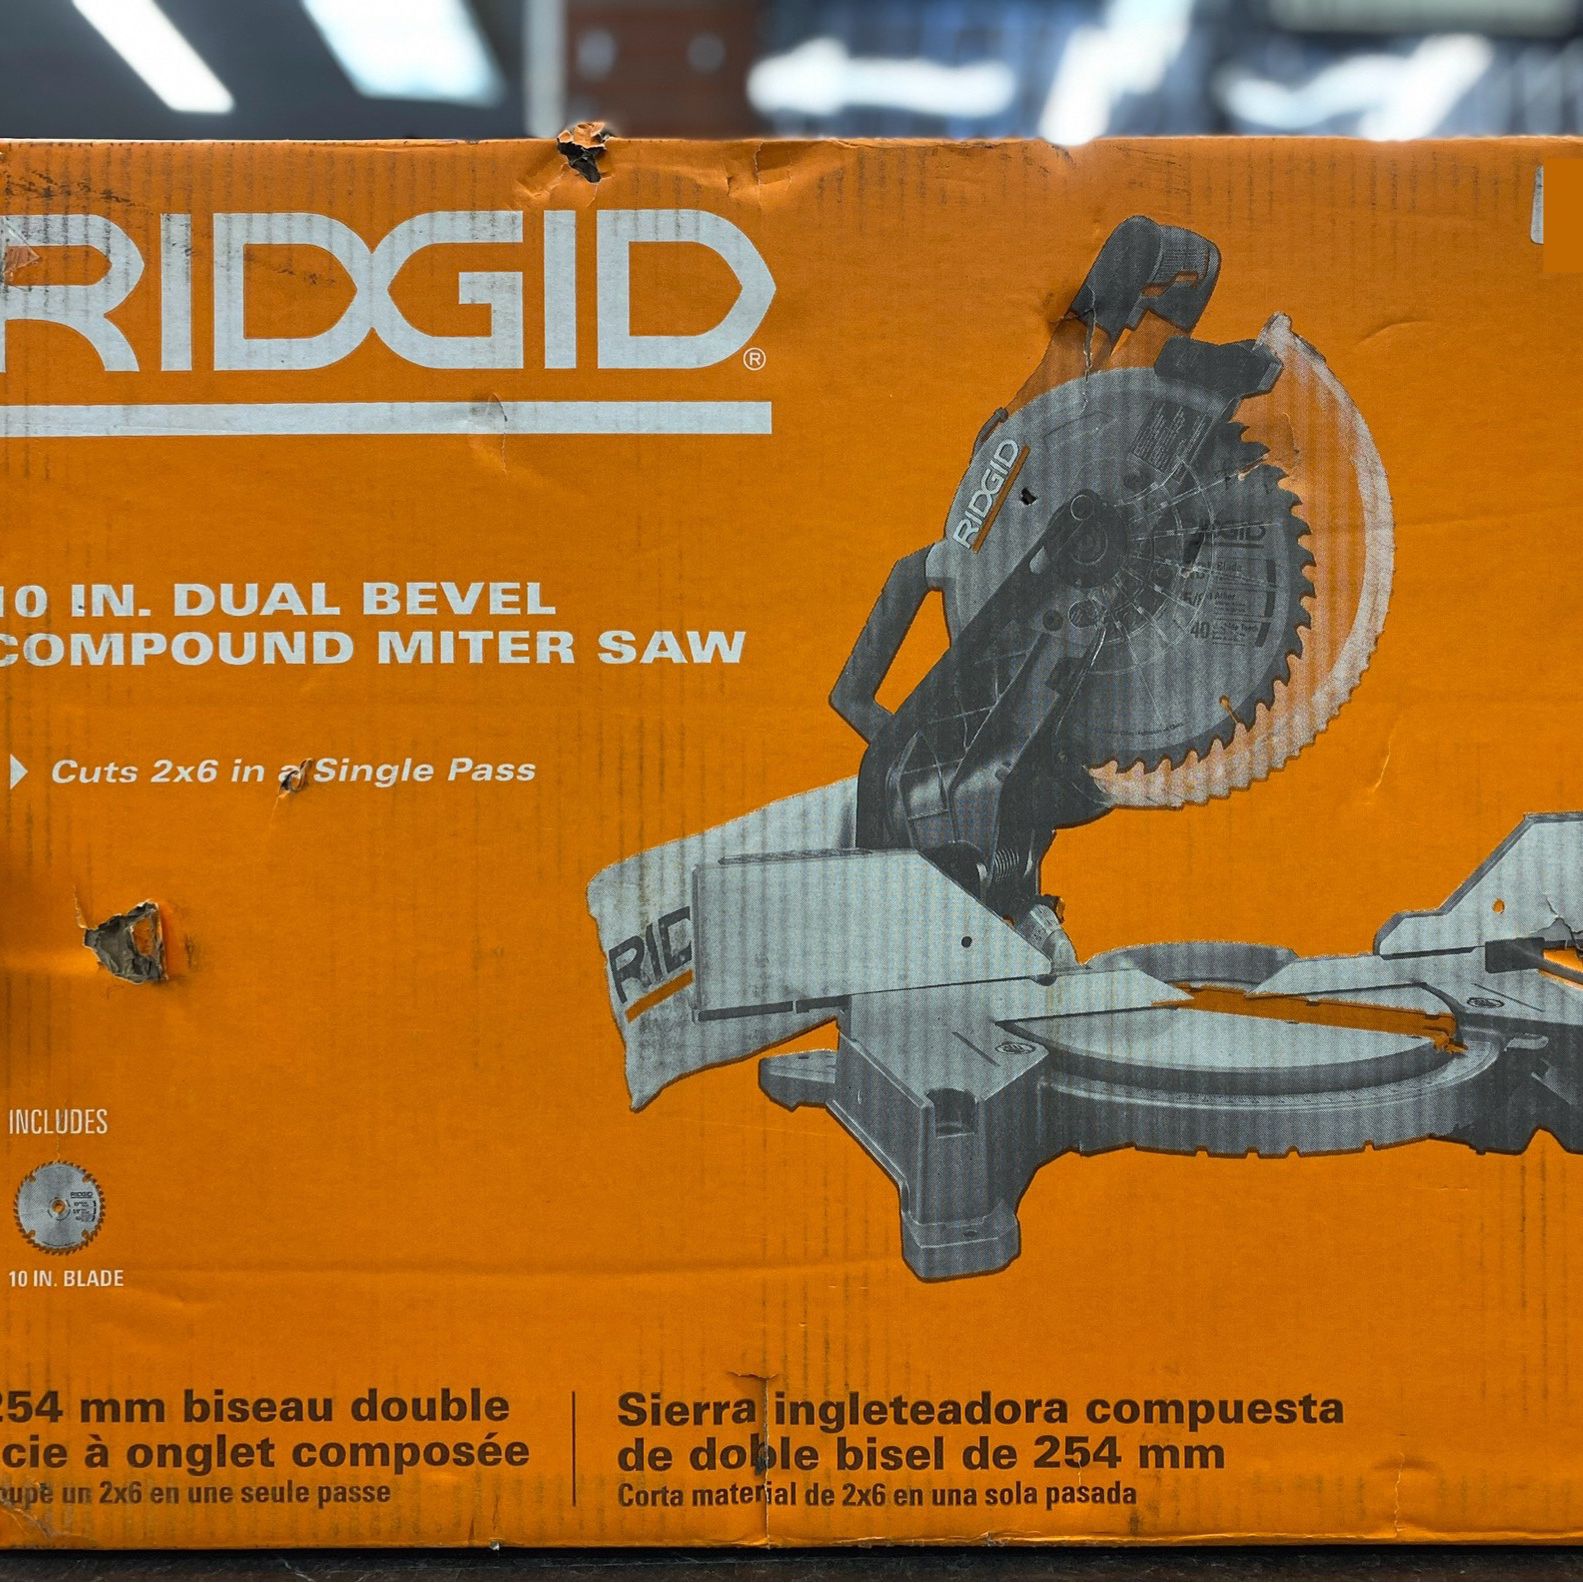 RIDGID Miter Saw R4113 10" Dual Bevel Compound Miter Saw - Local pick up